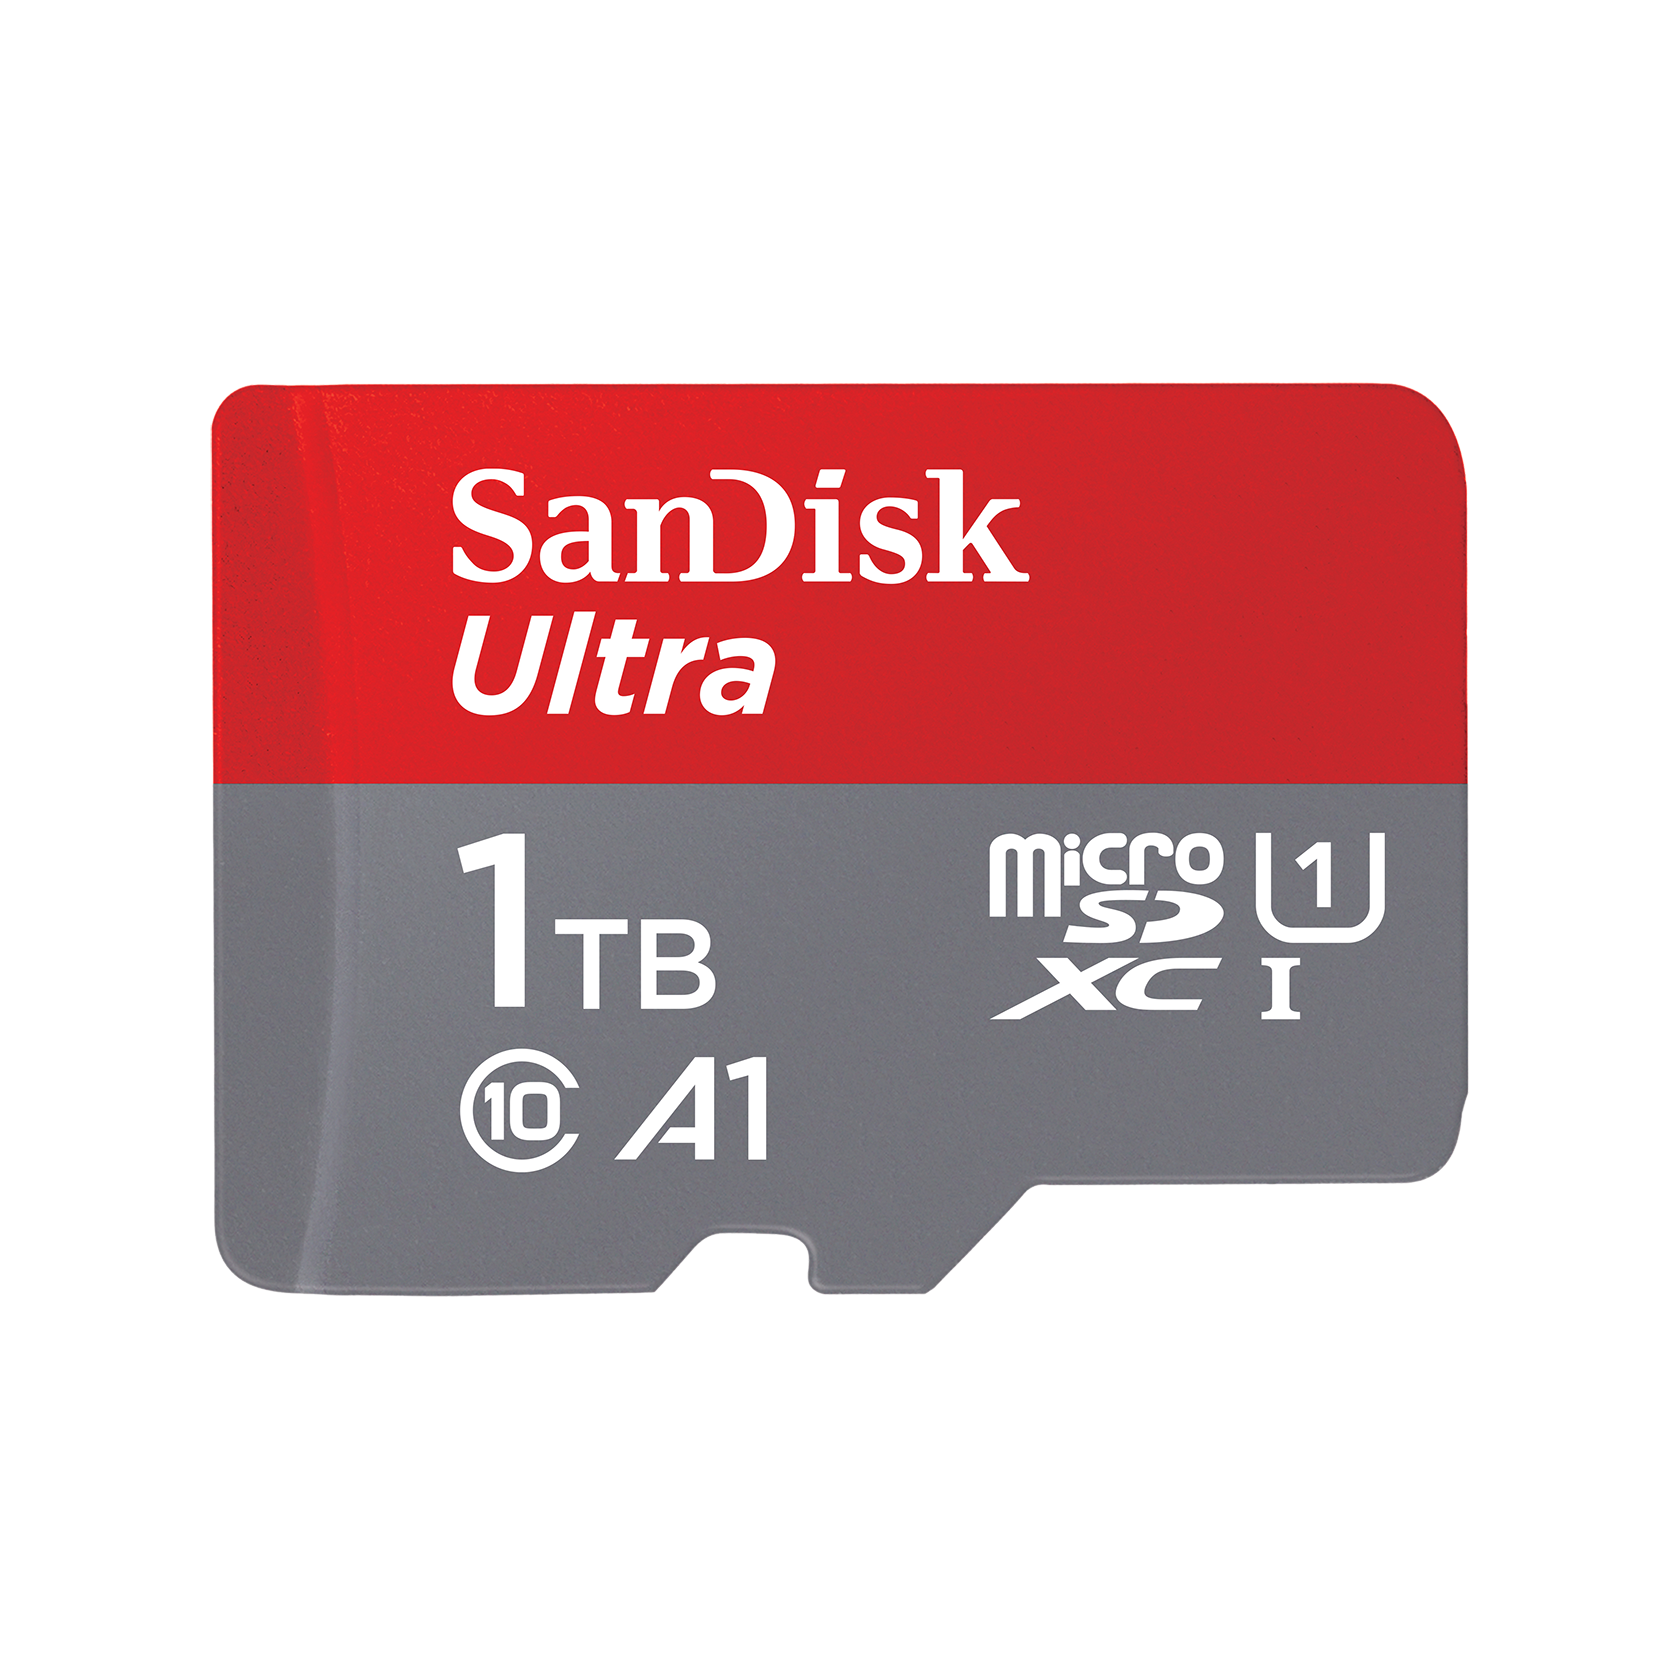 SanDisk 1TB 繧ｵ繝ｳ繝�繧｣繧ｹ繧ｯ 繧ｦ繝ｫ繝医Λ MicroSD UHSI繧ｫ繝ｼ繝� - SDSQUAR-1T00-JN3MA